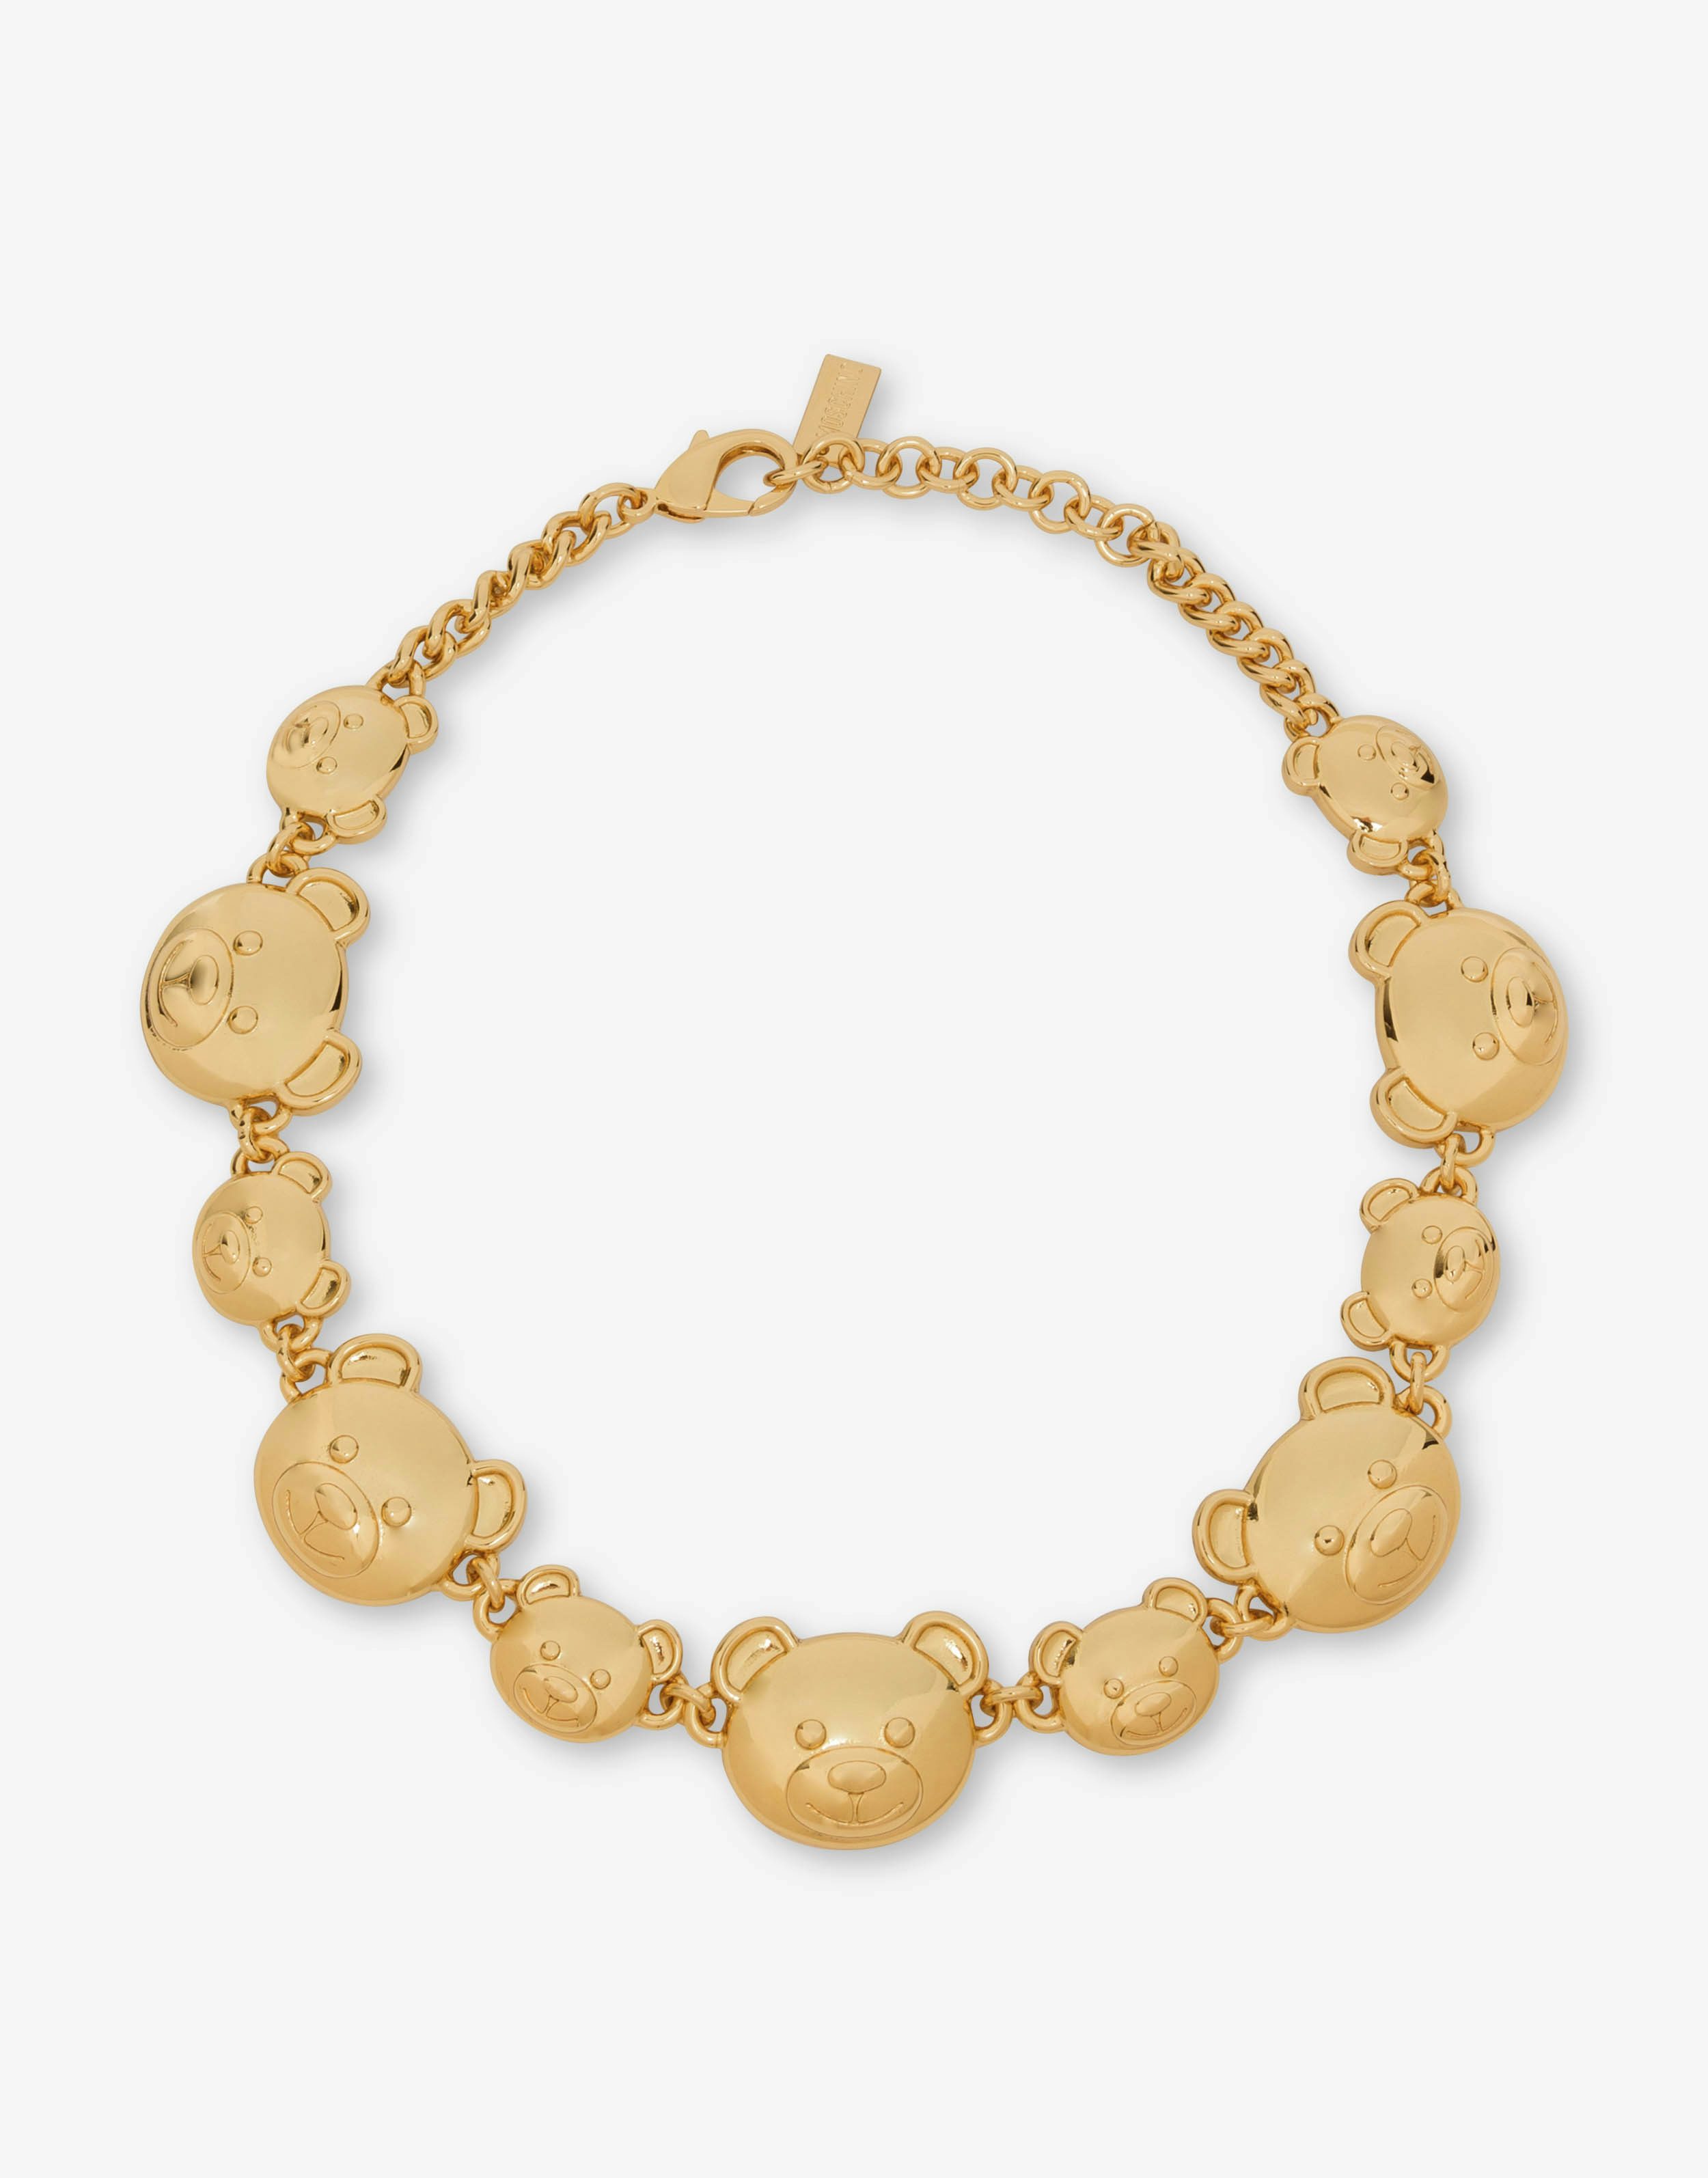 Moschino Teddy Bear choker necklace.